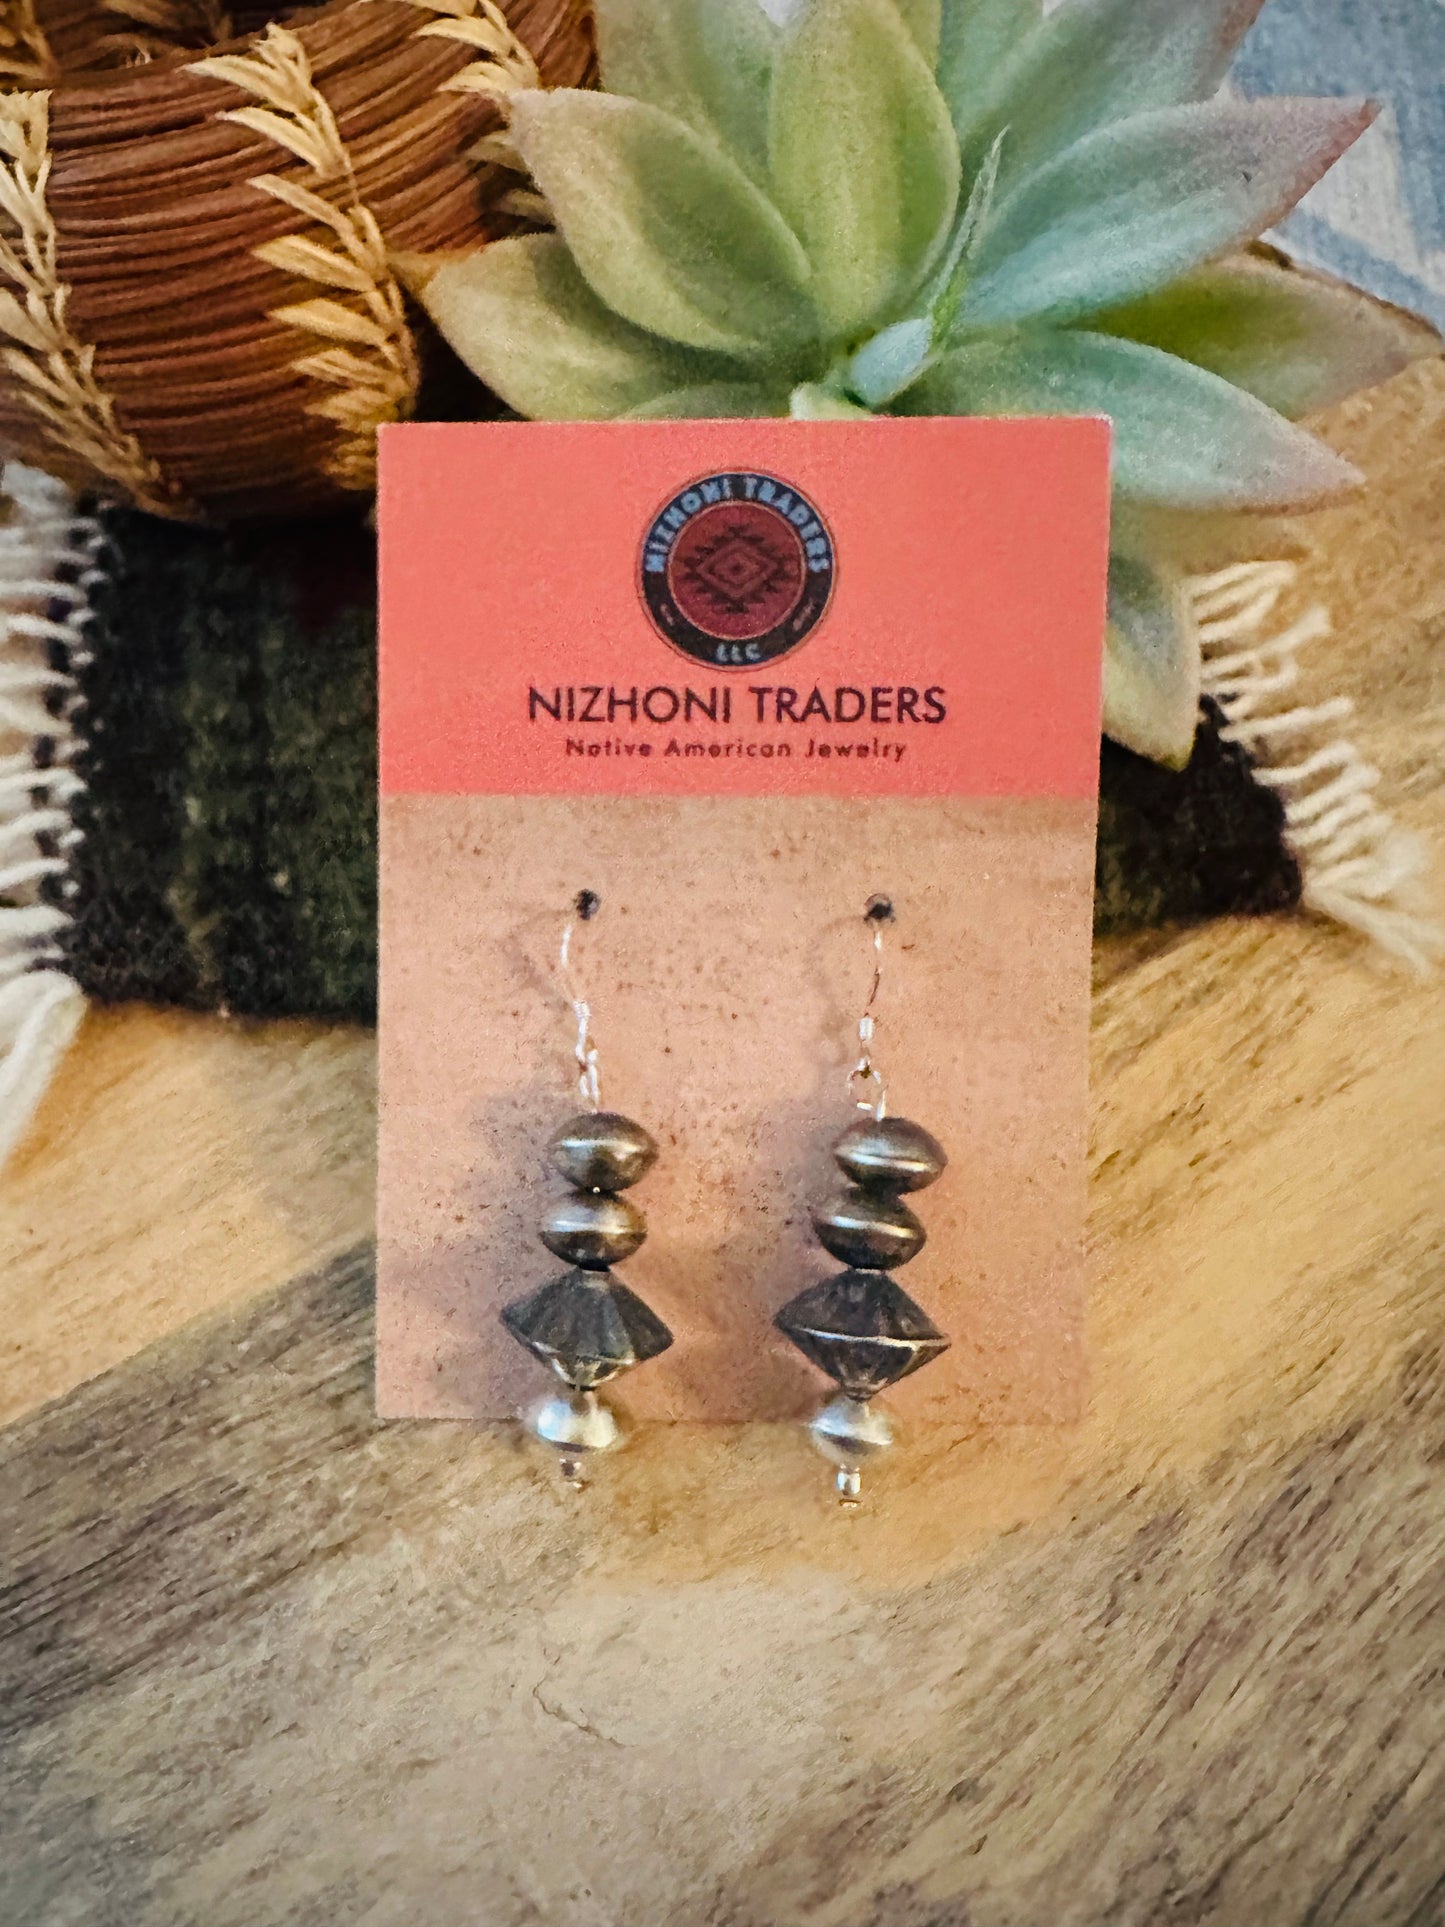 Navajo Sterling Silver Pearl Beaded Dangle Earrings